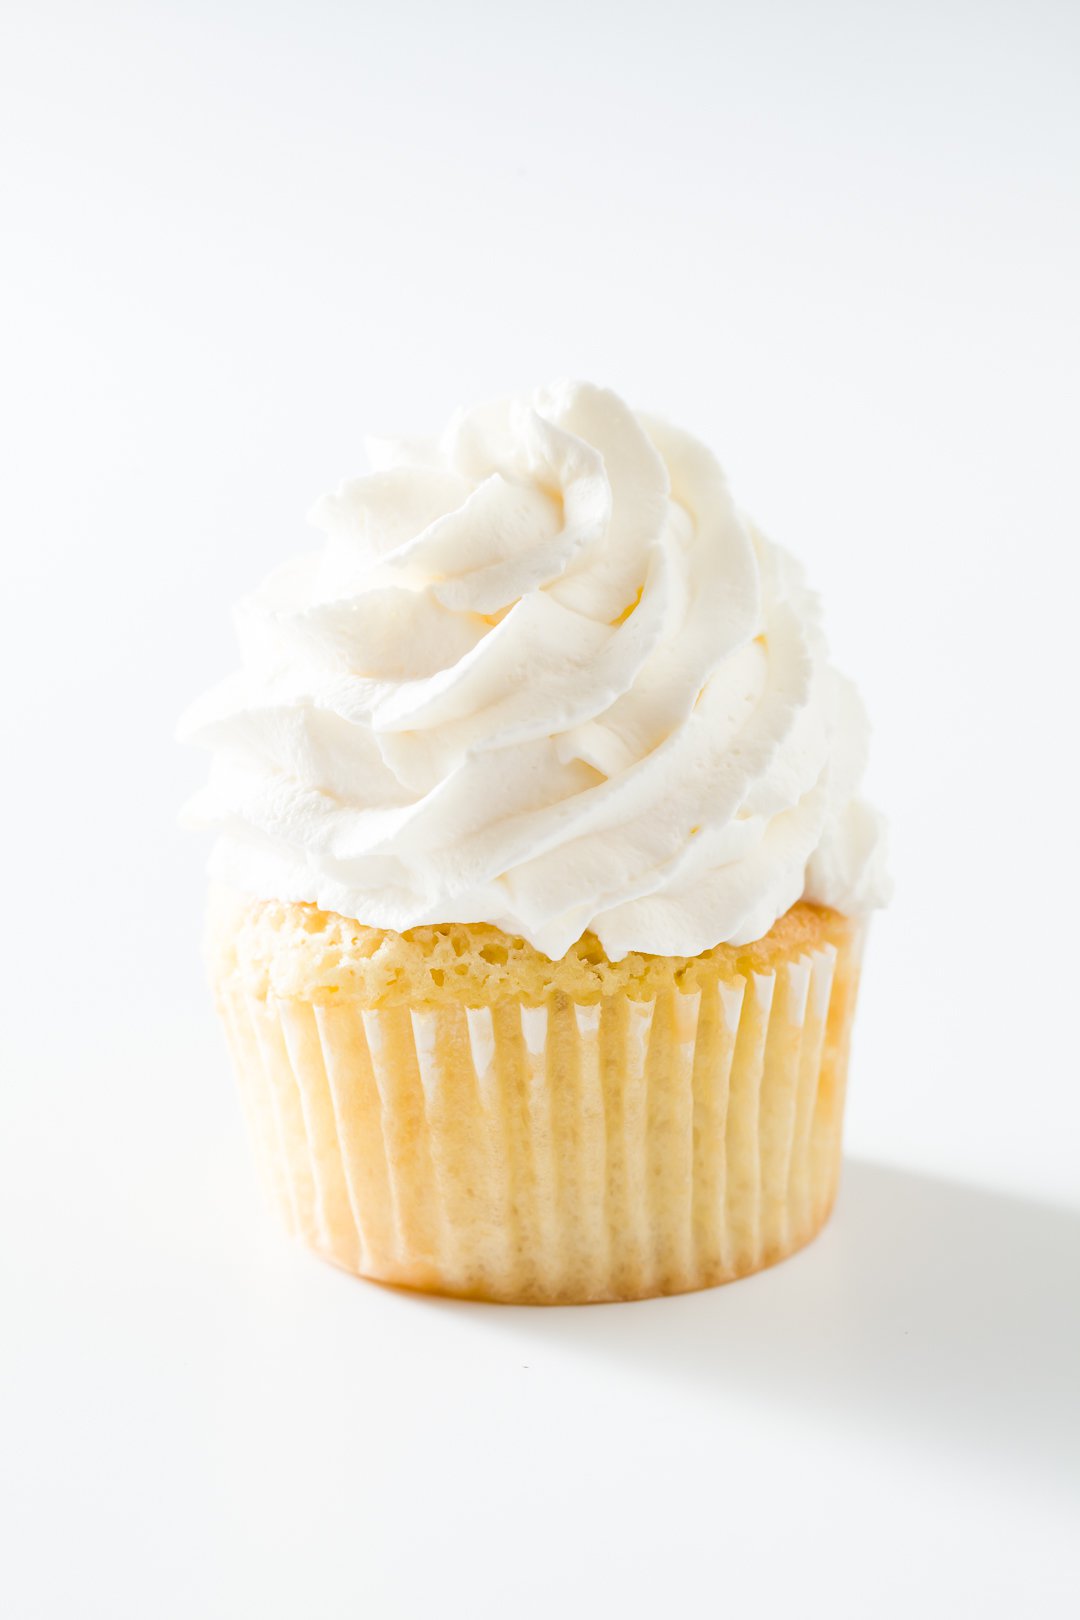 Chantilly cream on a cupcake